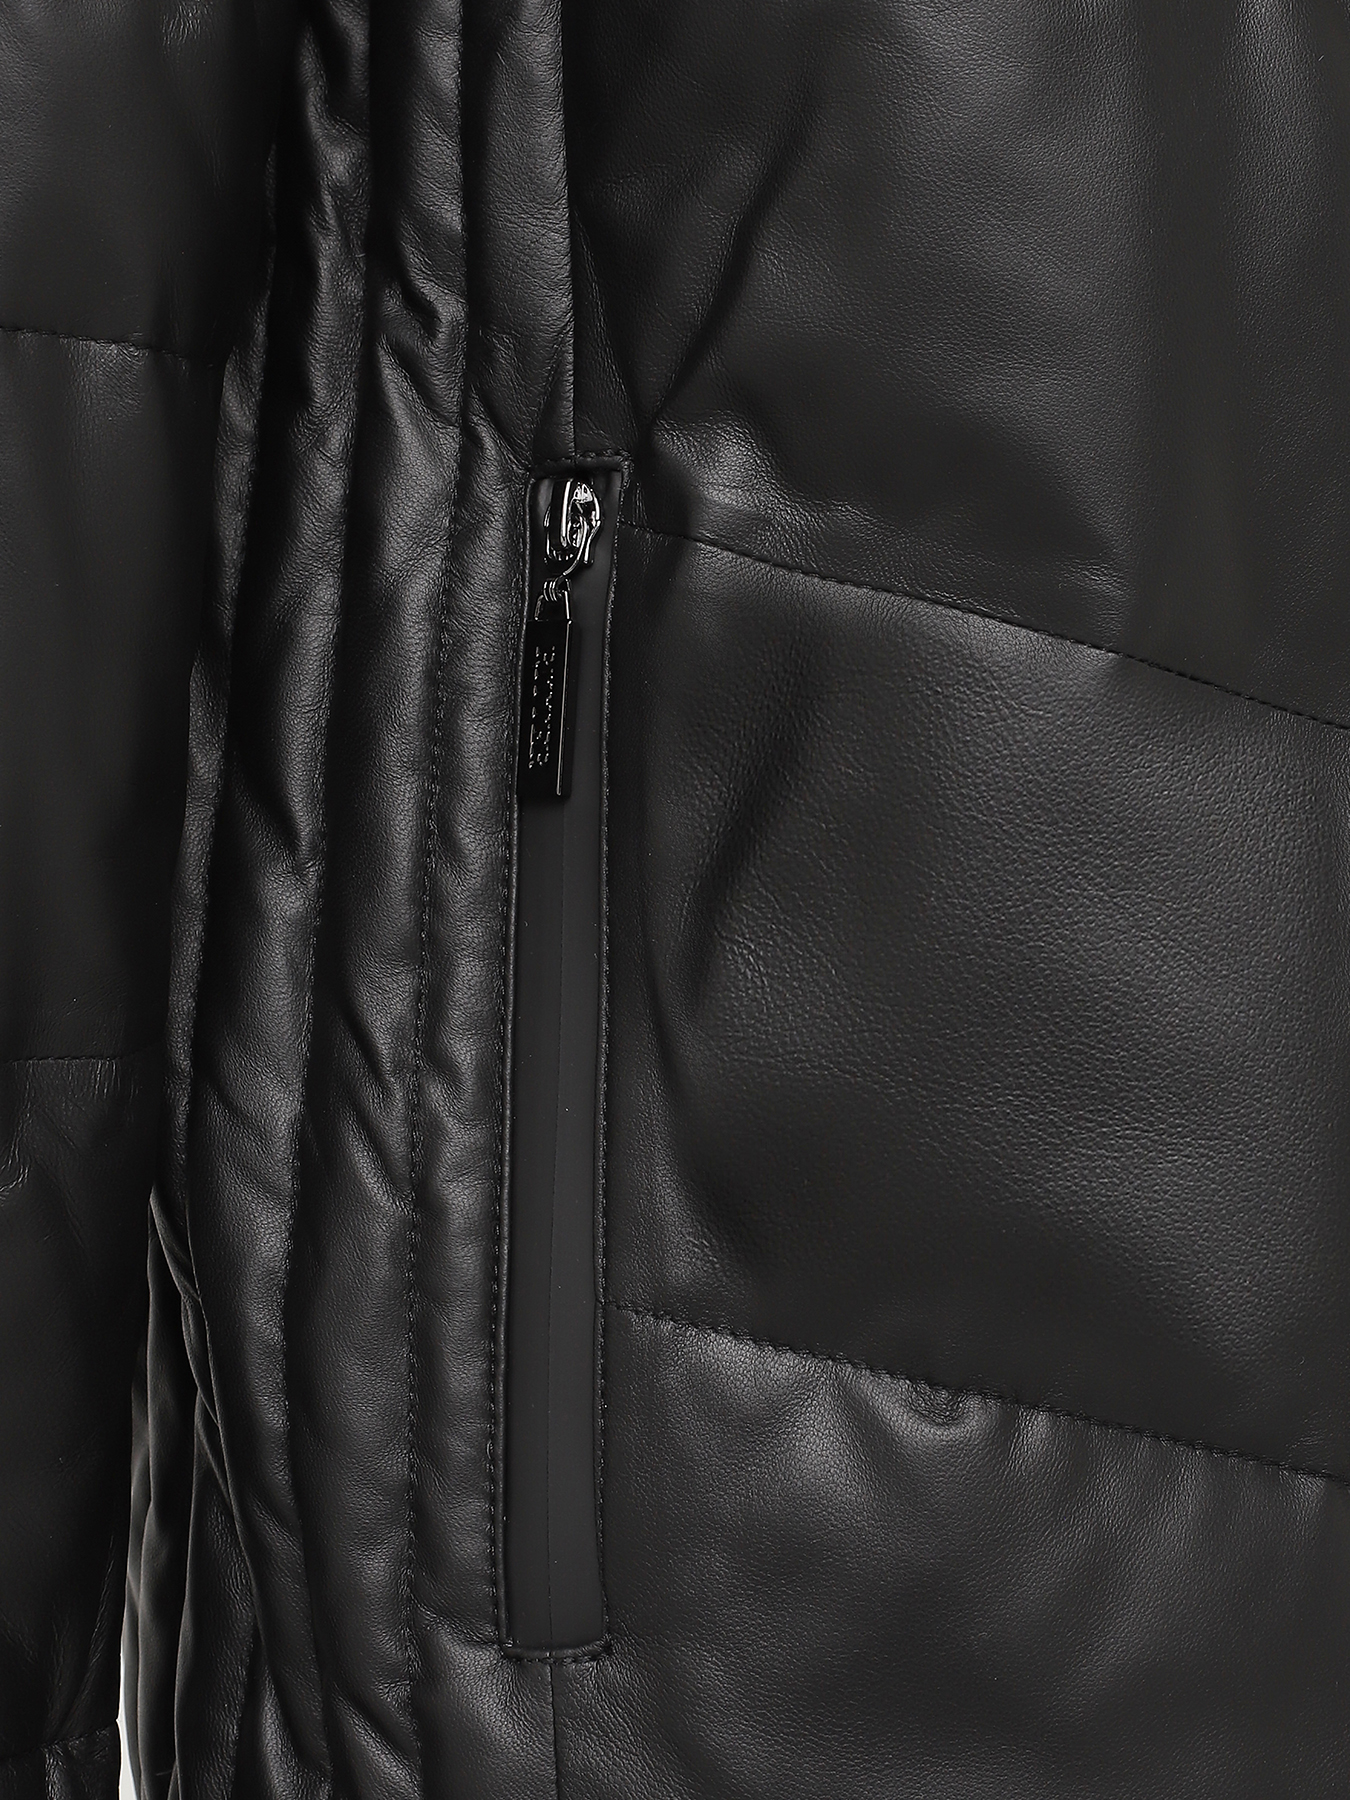 Кожаная куртка Ritter 417699-032, цвет черный, размер 62 - фото 3